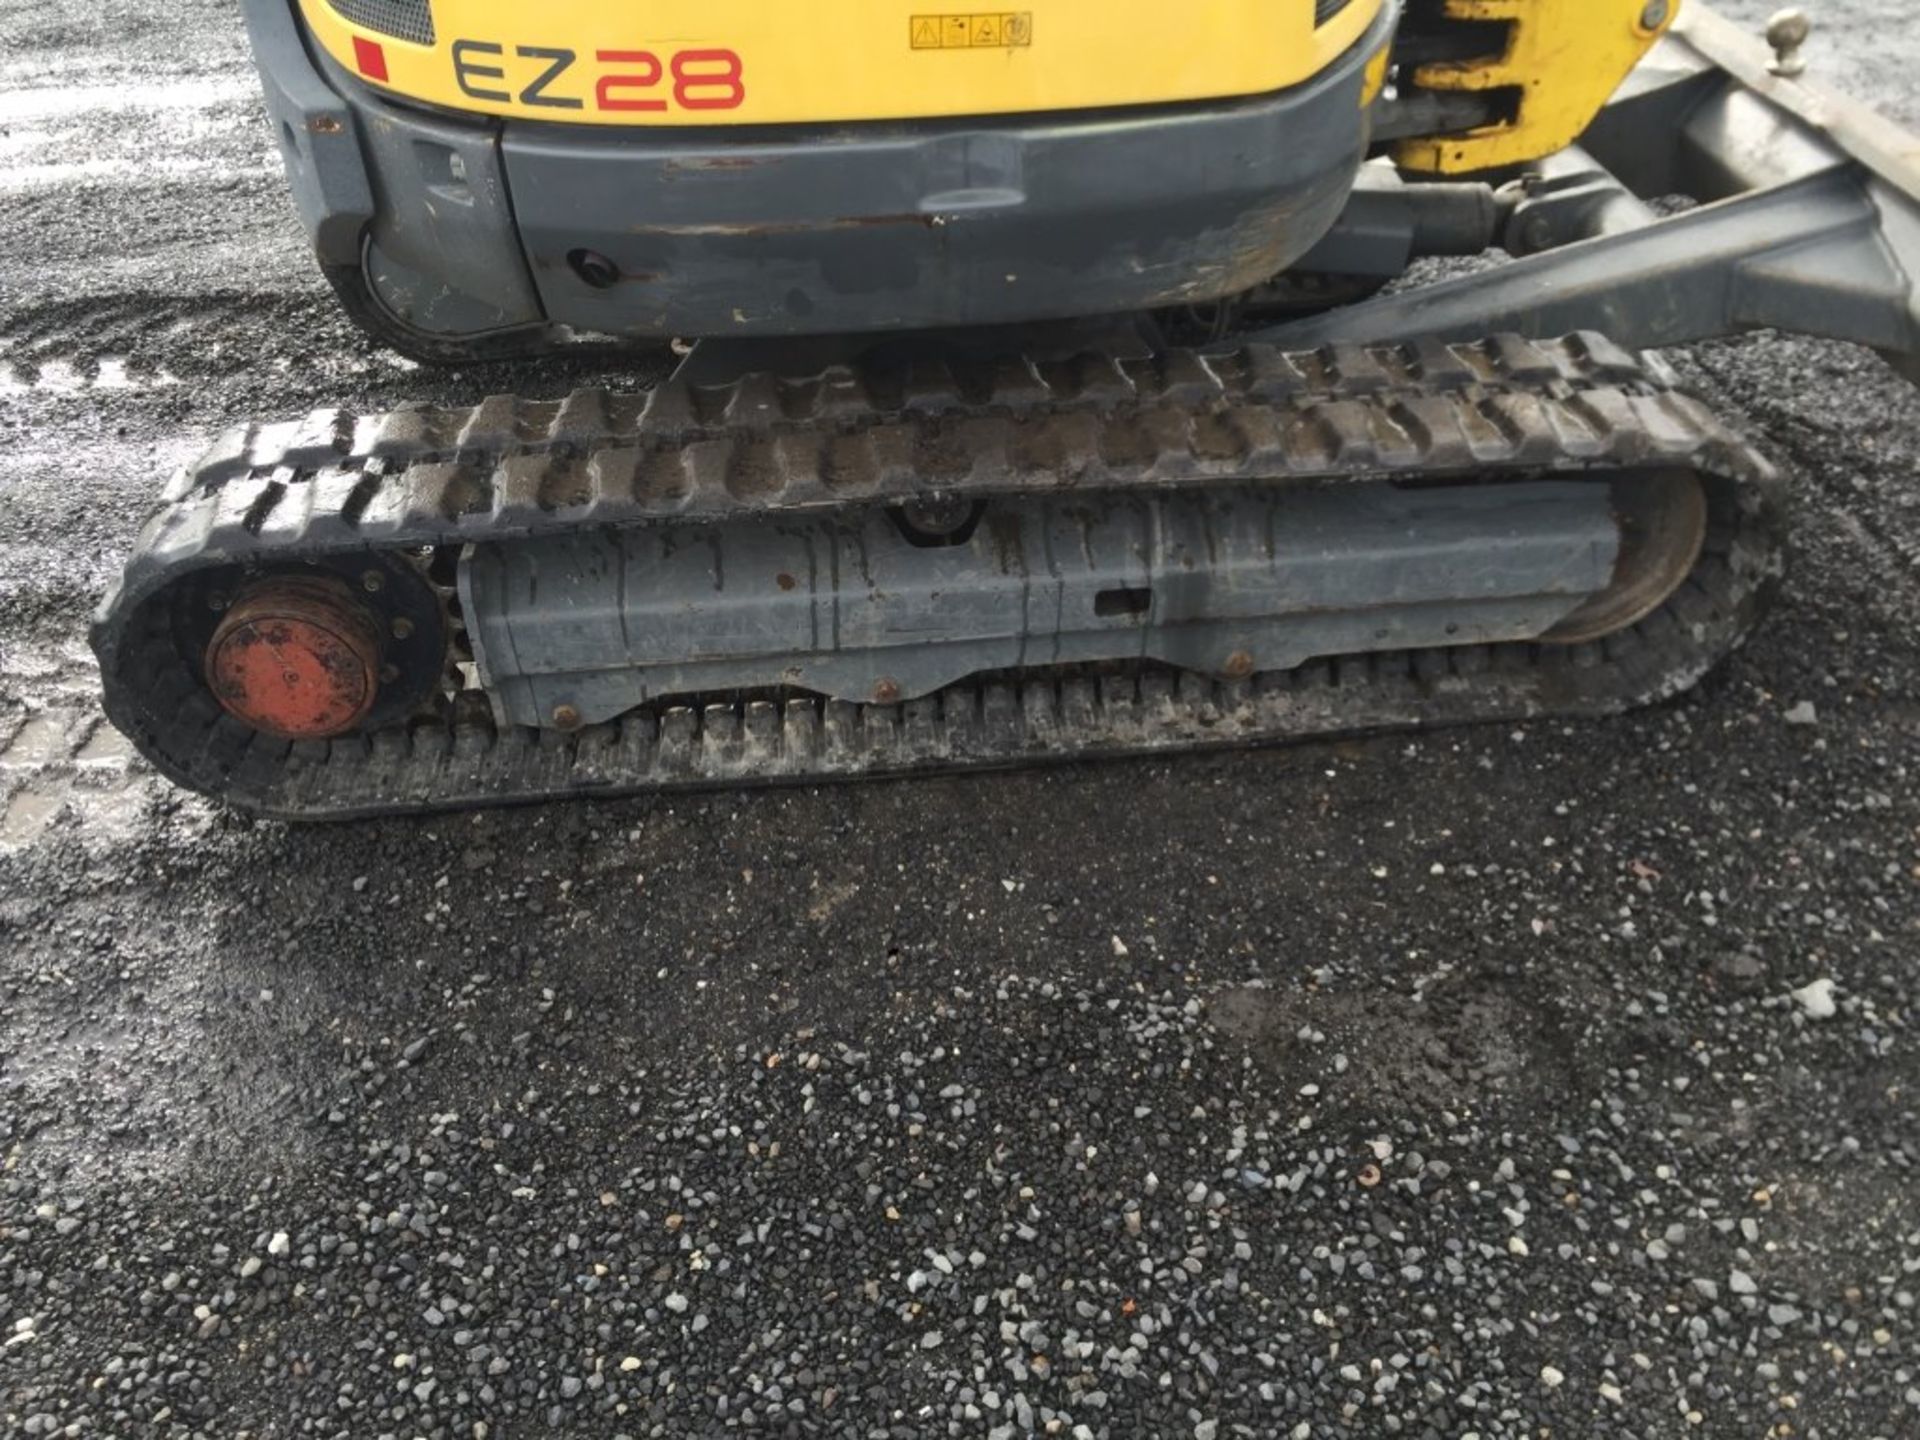 2014 Wacker Neuson EZ28 Mini Hydraulic Excavator - Image 15 of 37